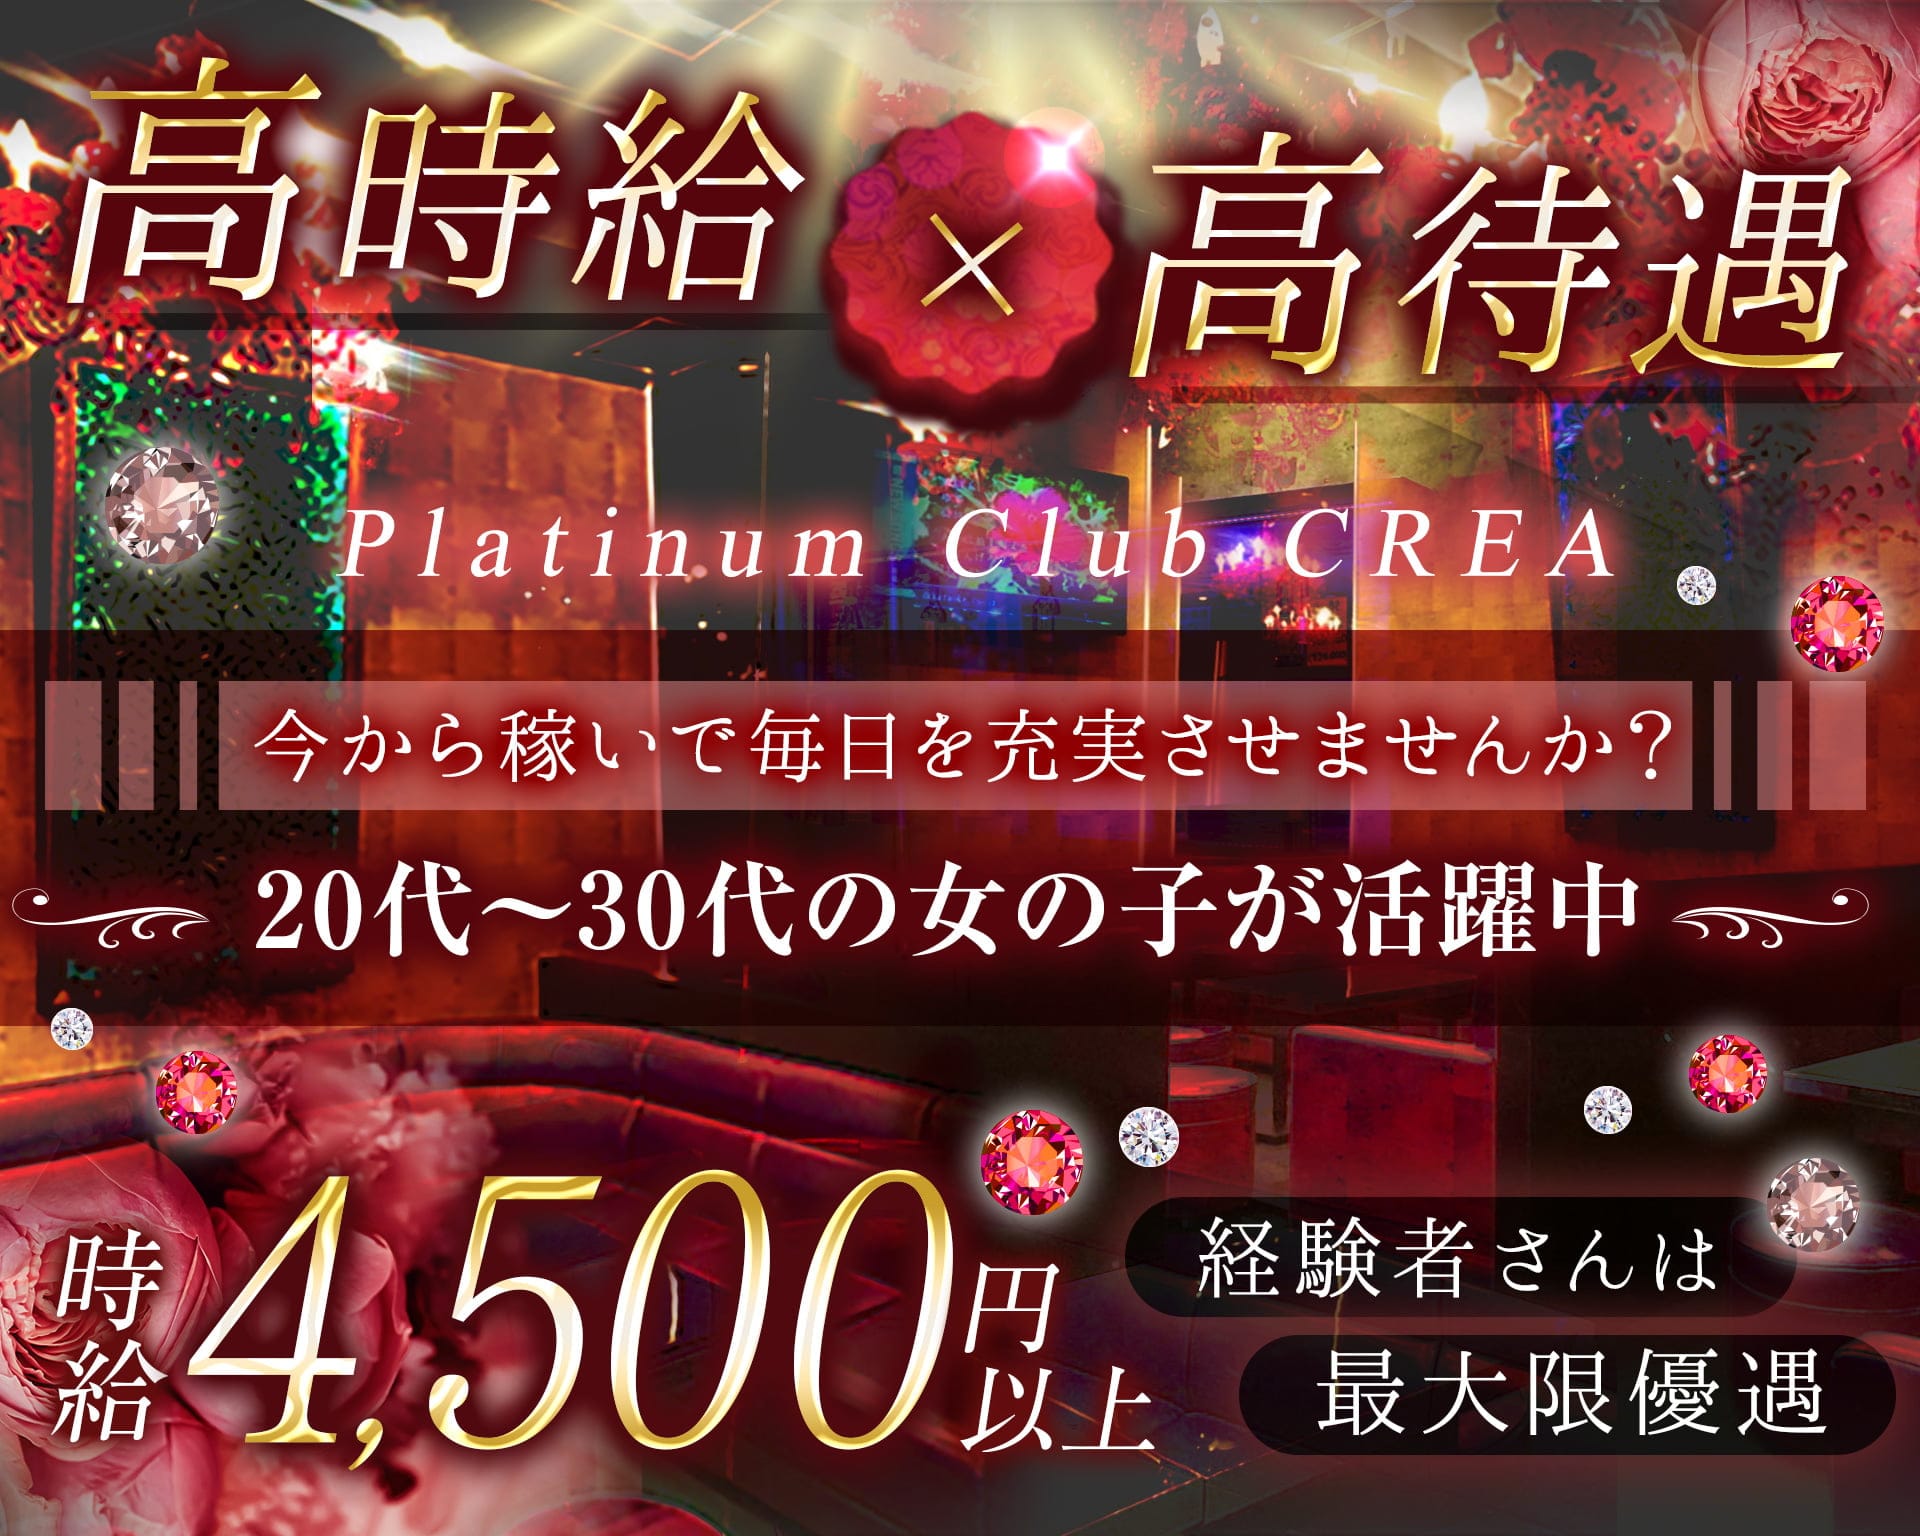 Platinum Club CREA（クレア）【公式体入・求人情報】 上野姉キャバ・半熟キャバ TOP画像